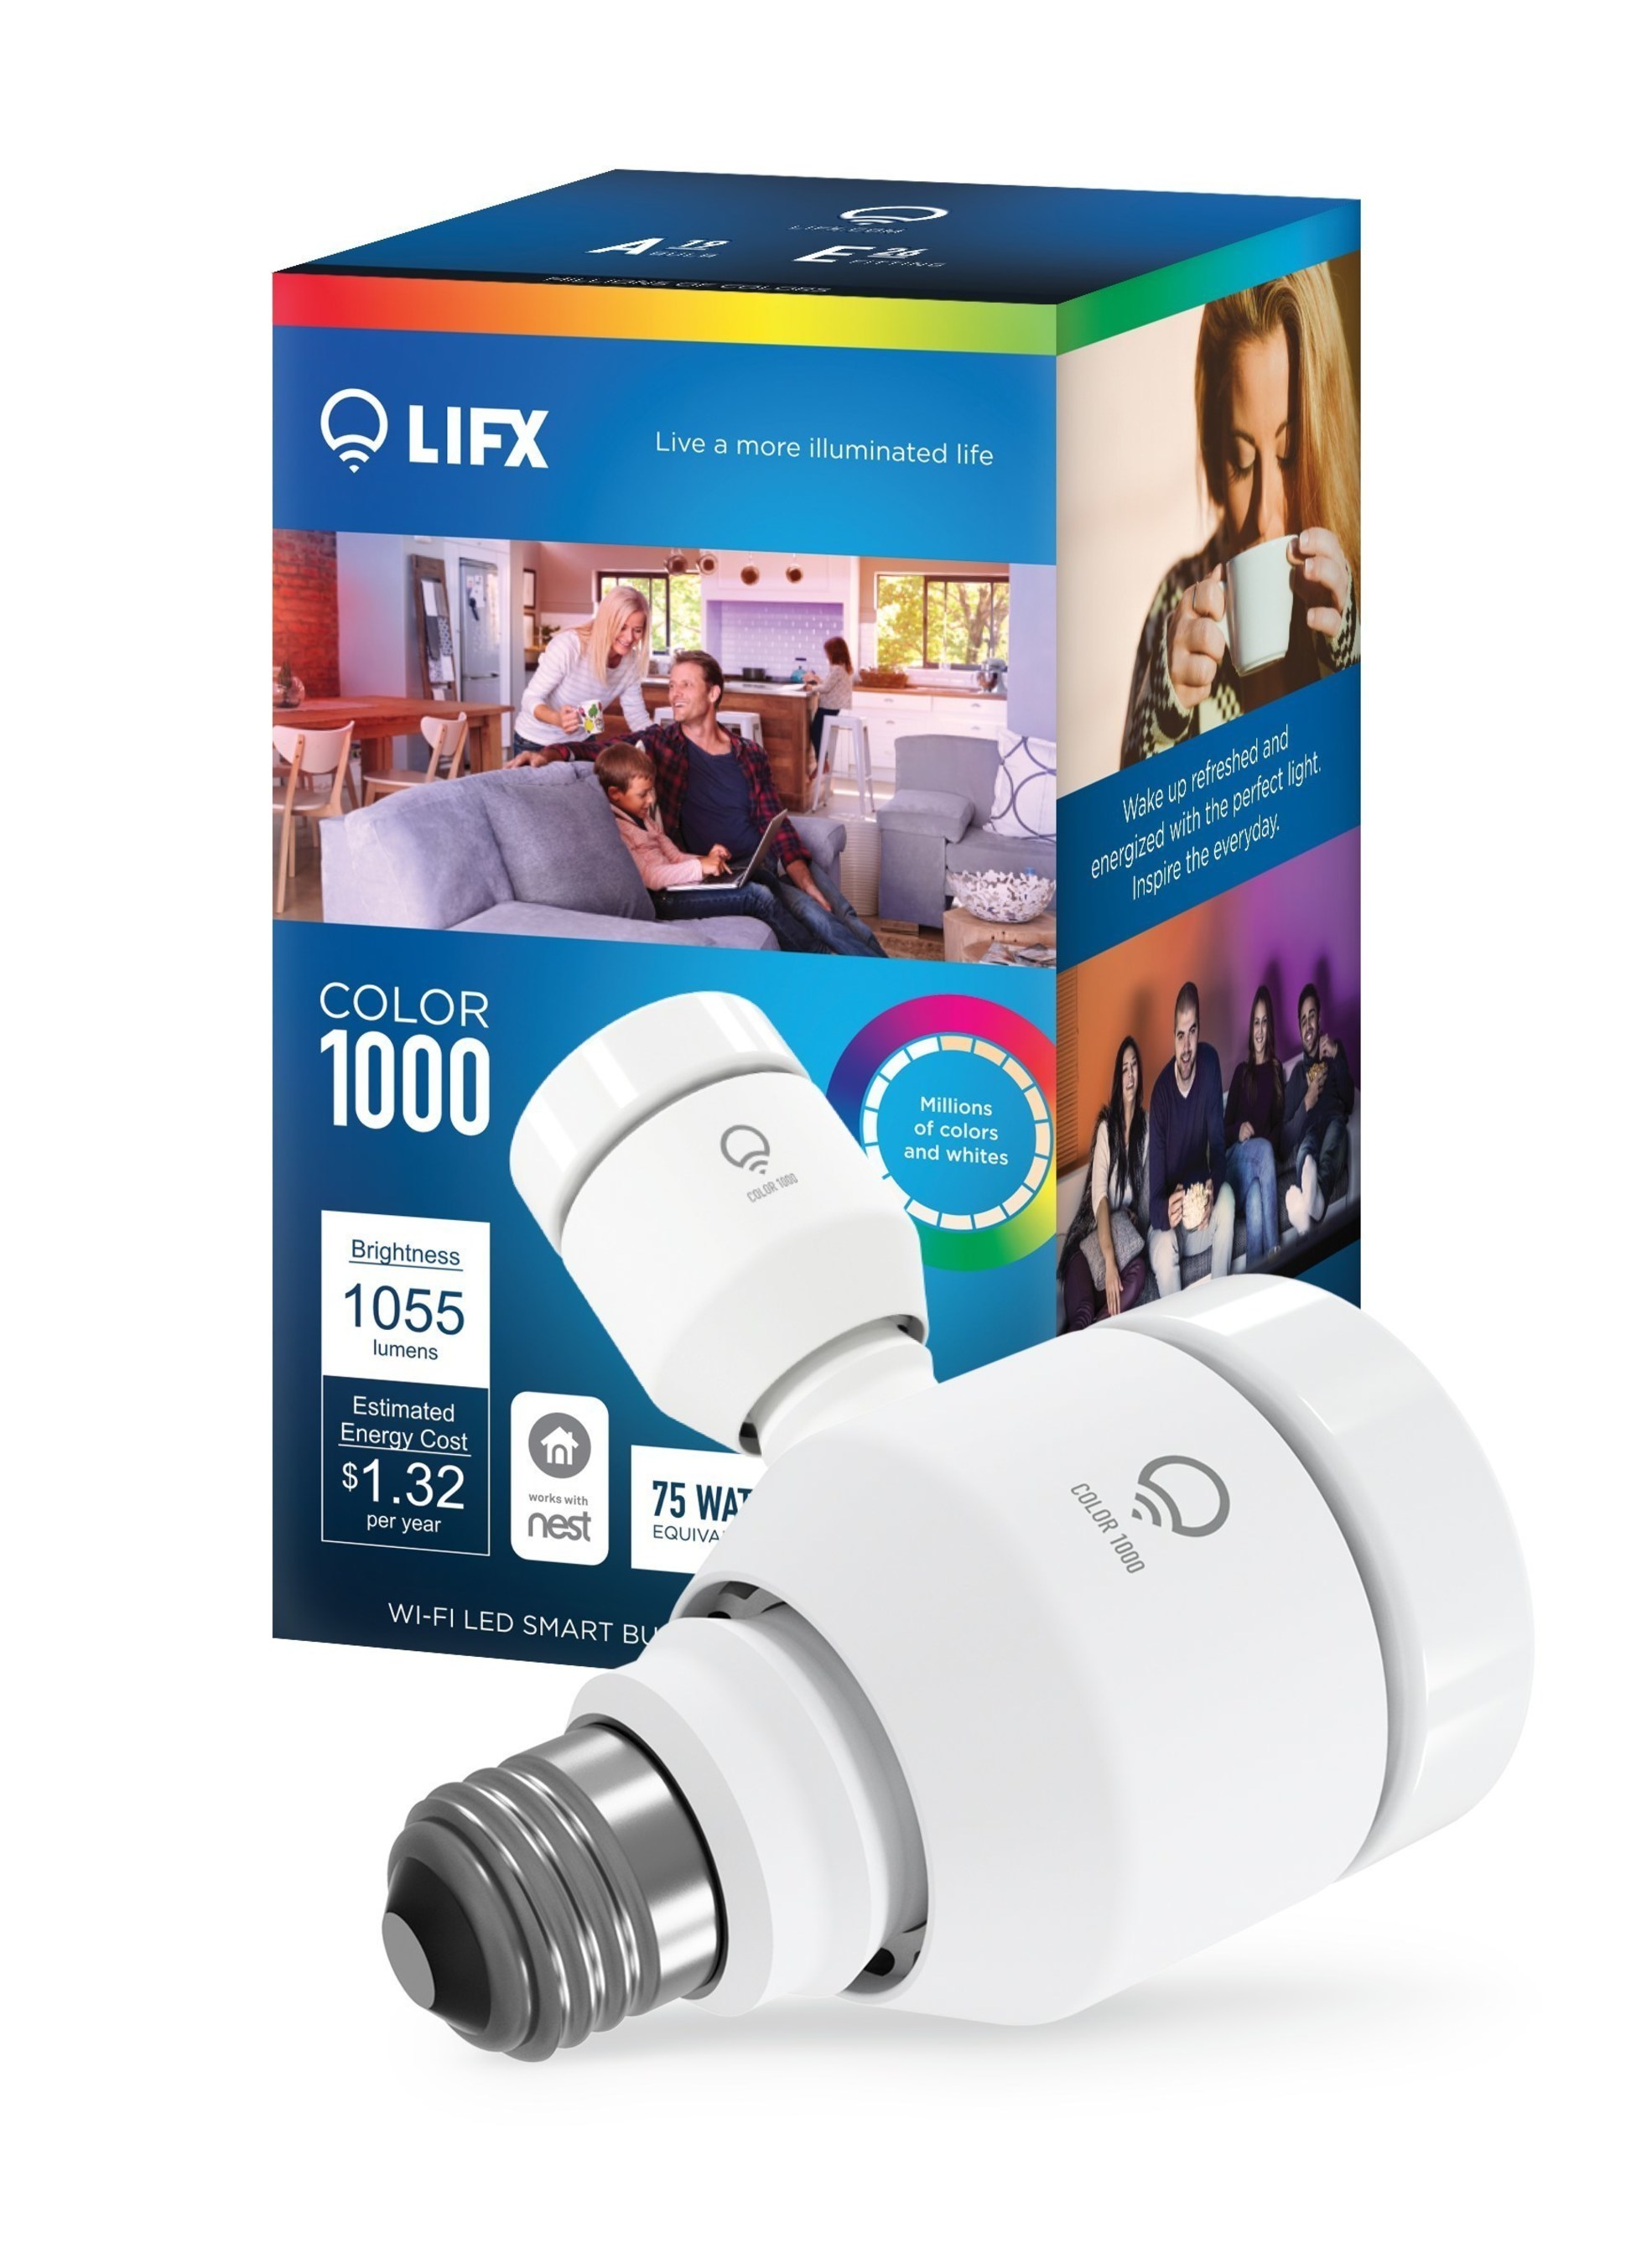 The new LIFX Color 1000 Bulb